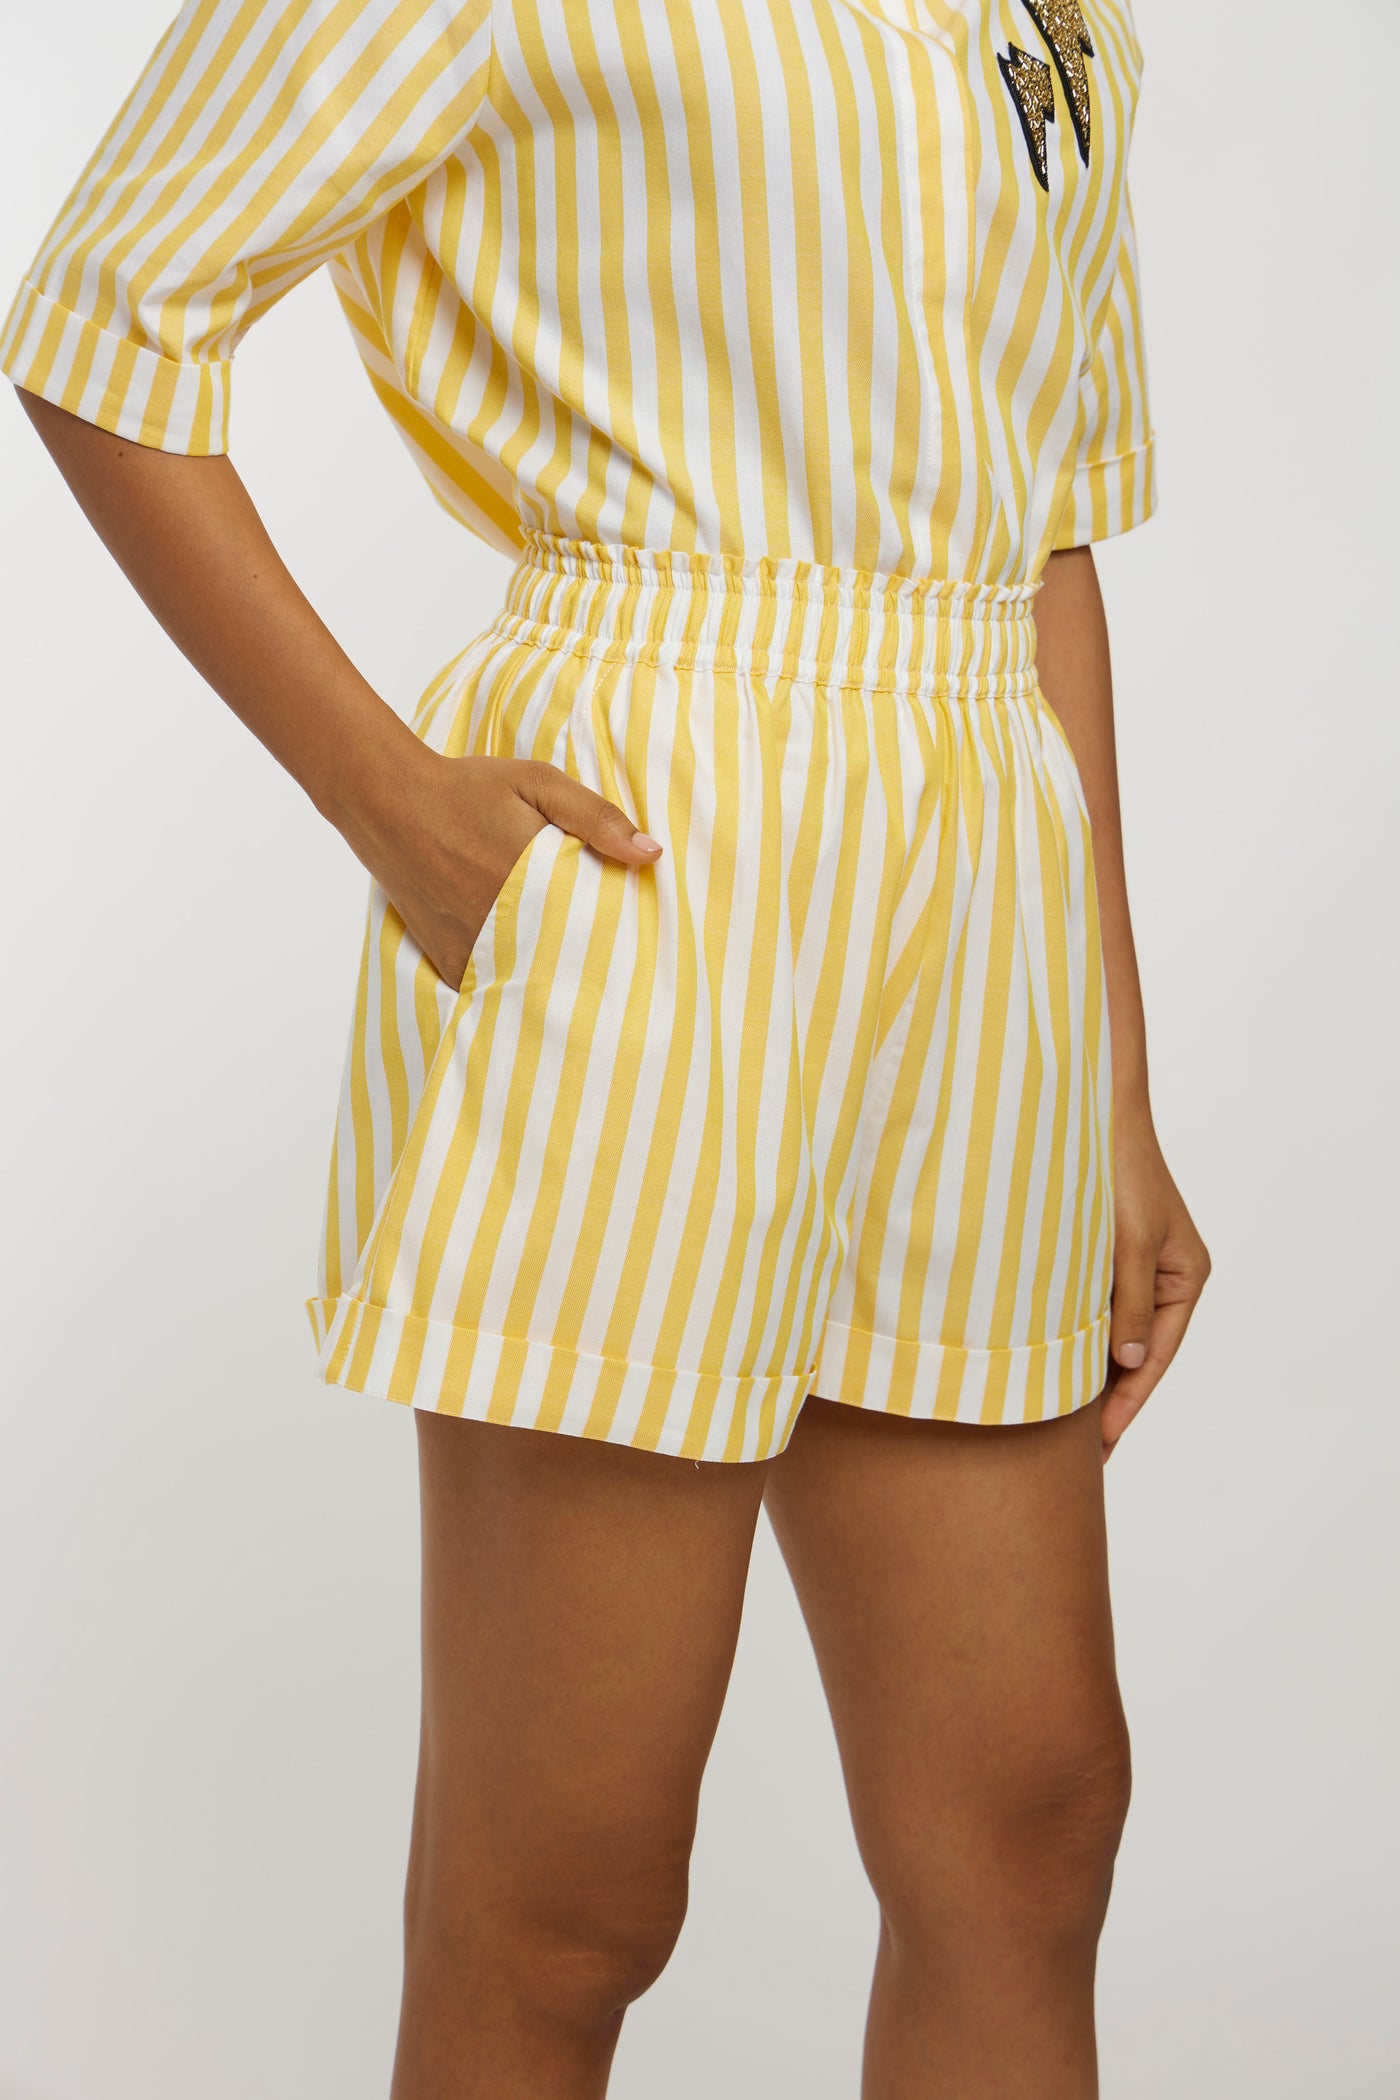 Yellow Stripe Shorts